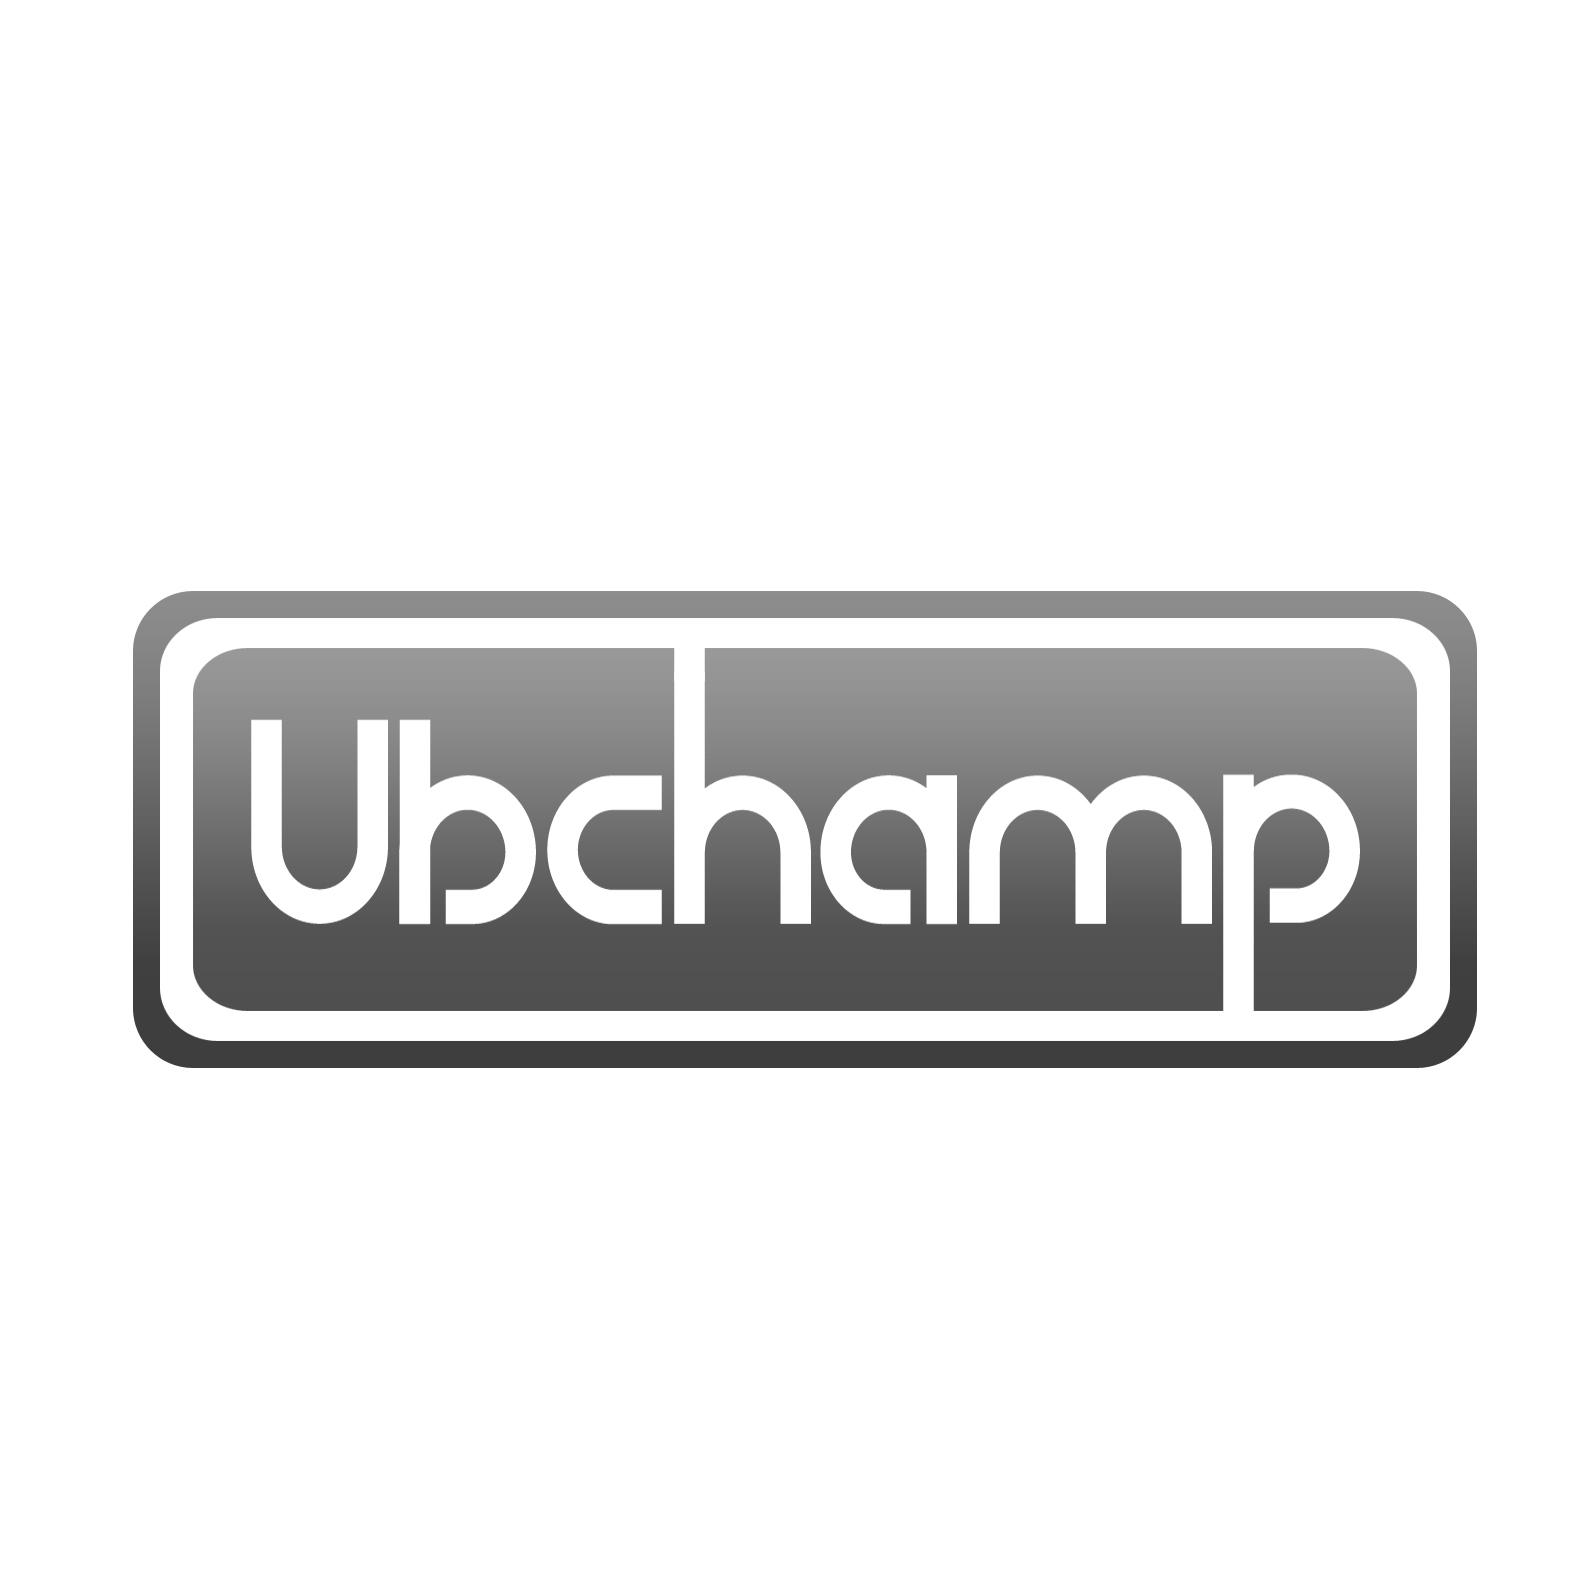 11类-电器灯具UBCHAMP商标转让